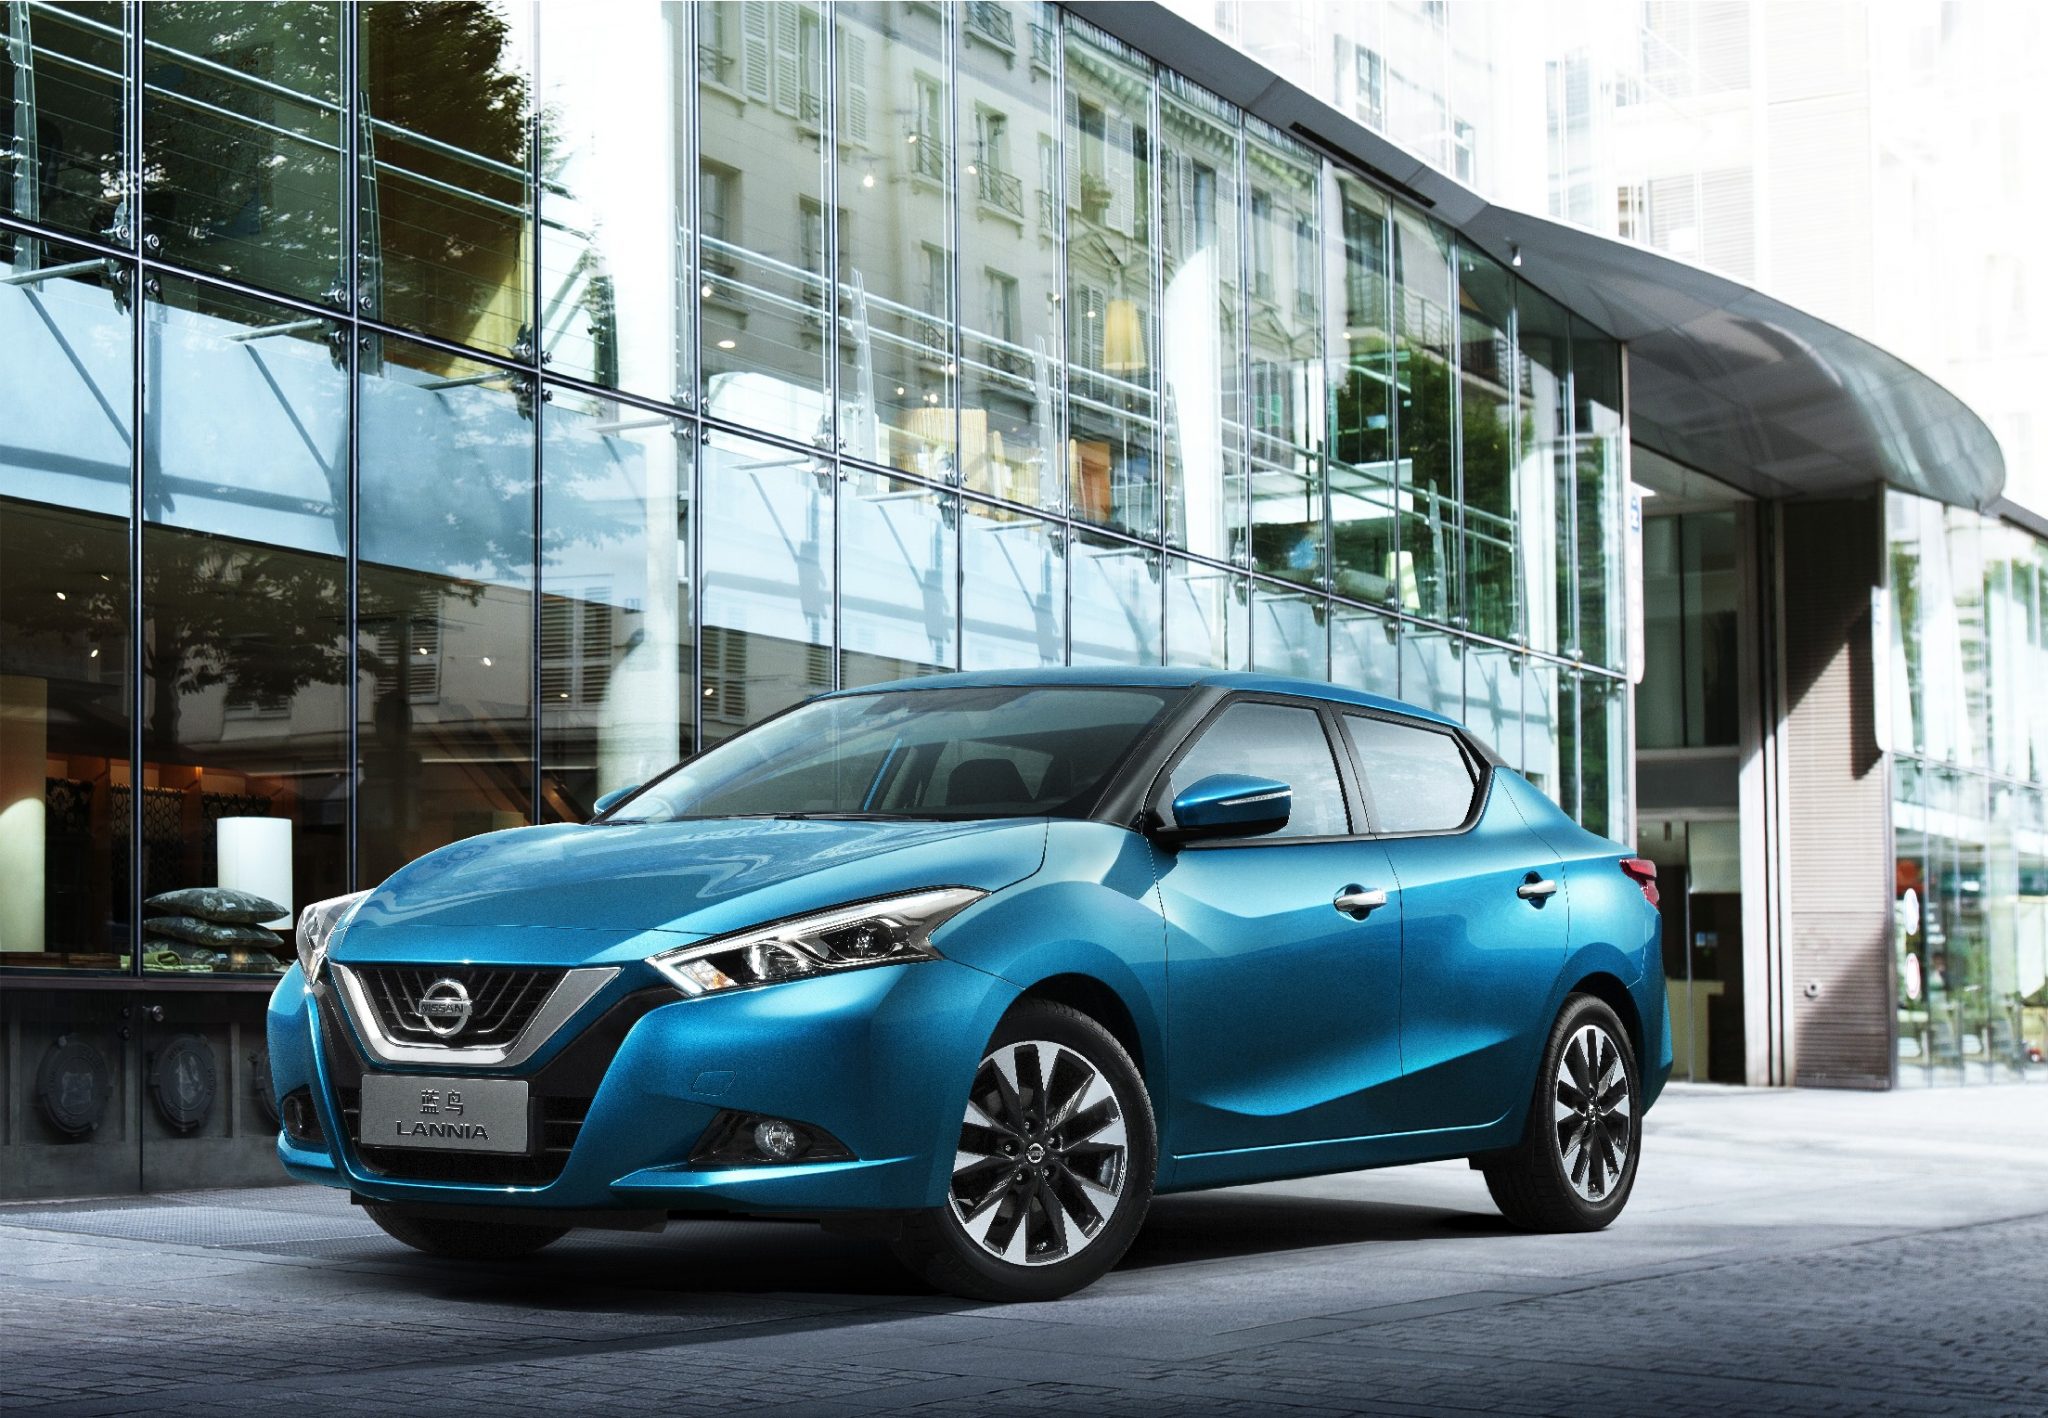 All-new Nissan Lannia makes its world premiere at Auto Shanghai